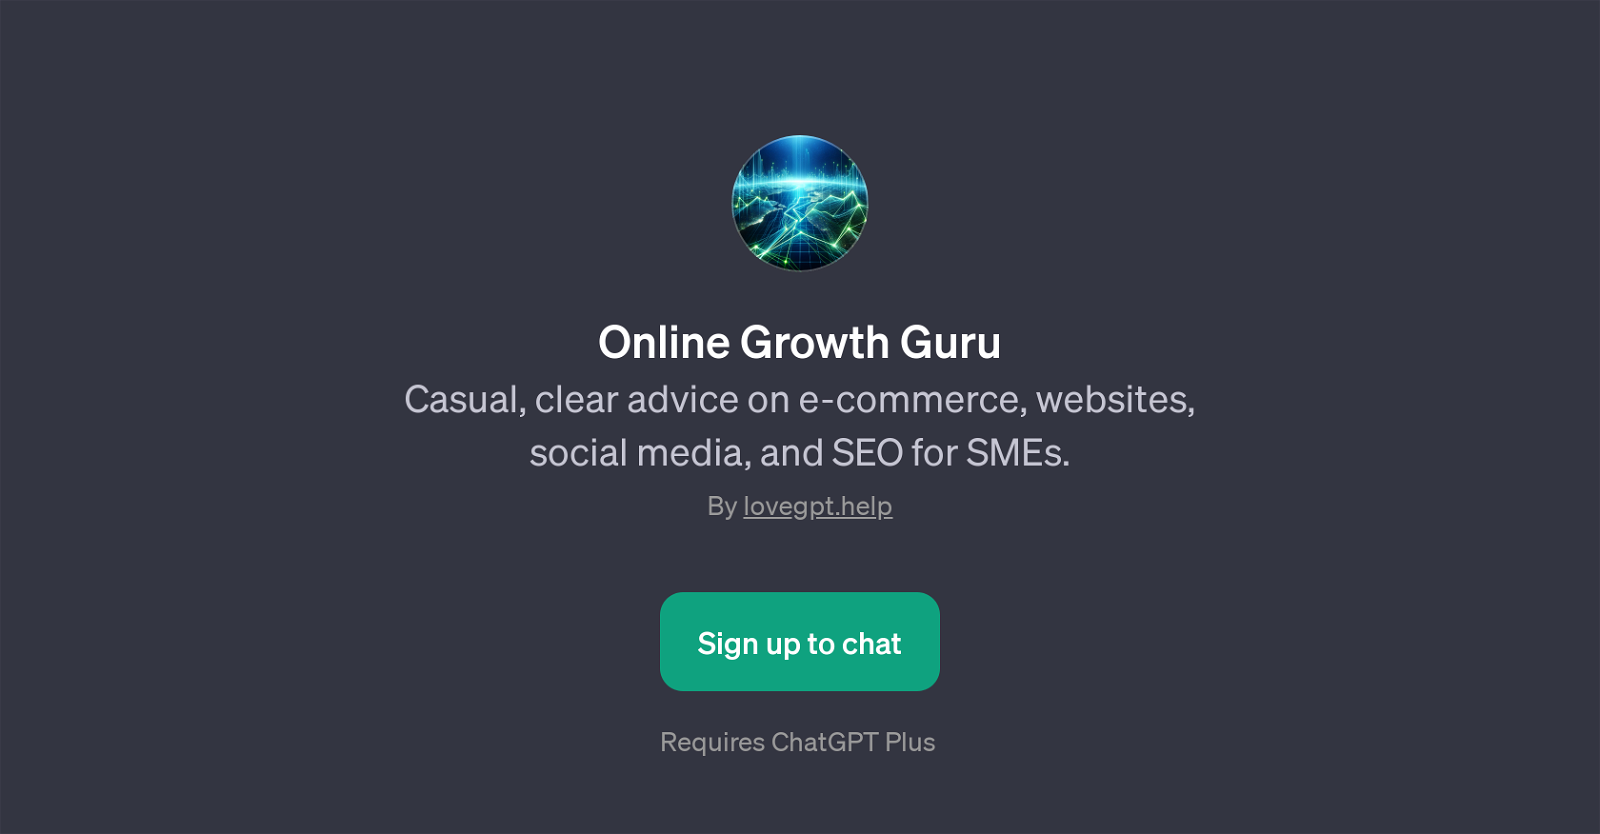 Online Growth Guru website